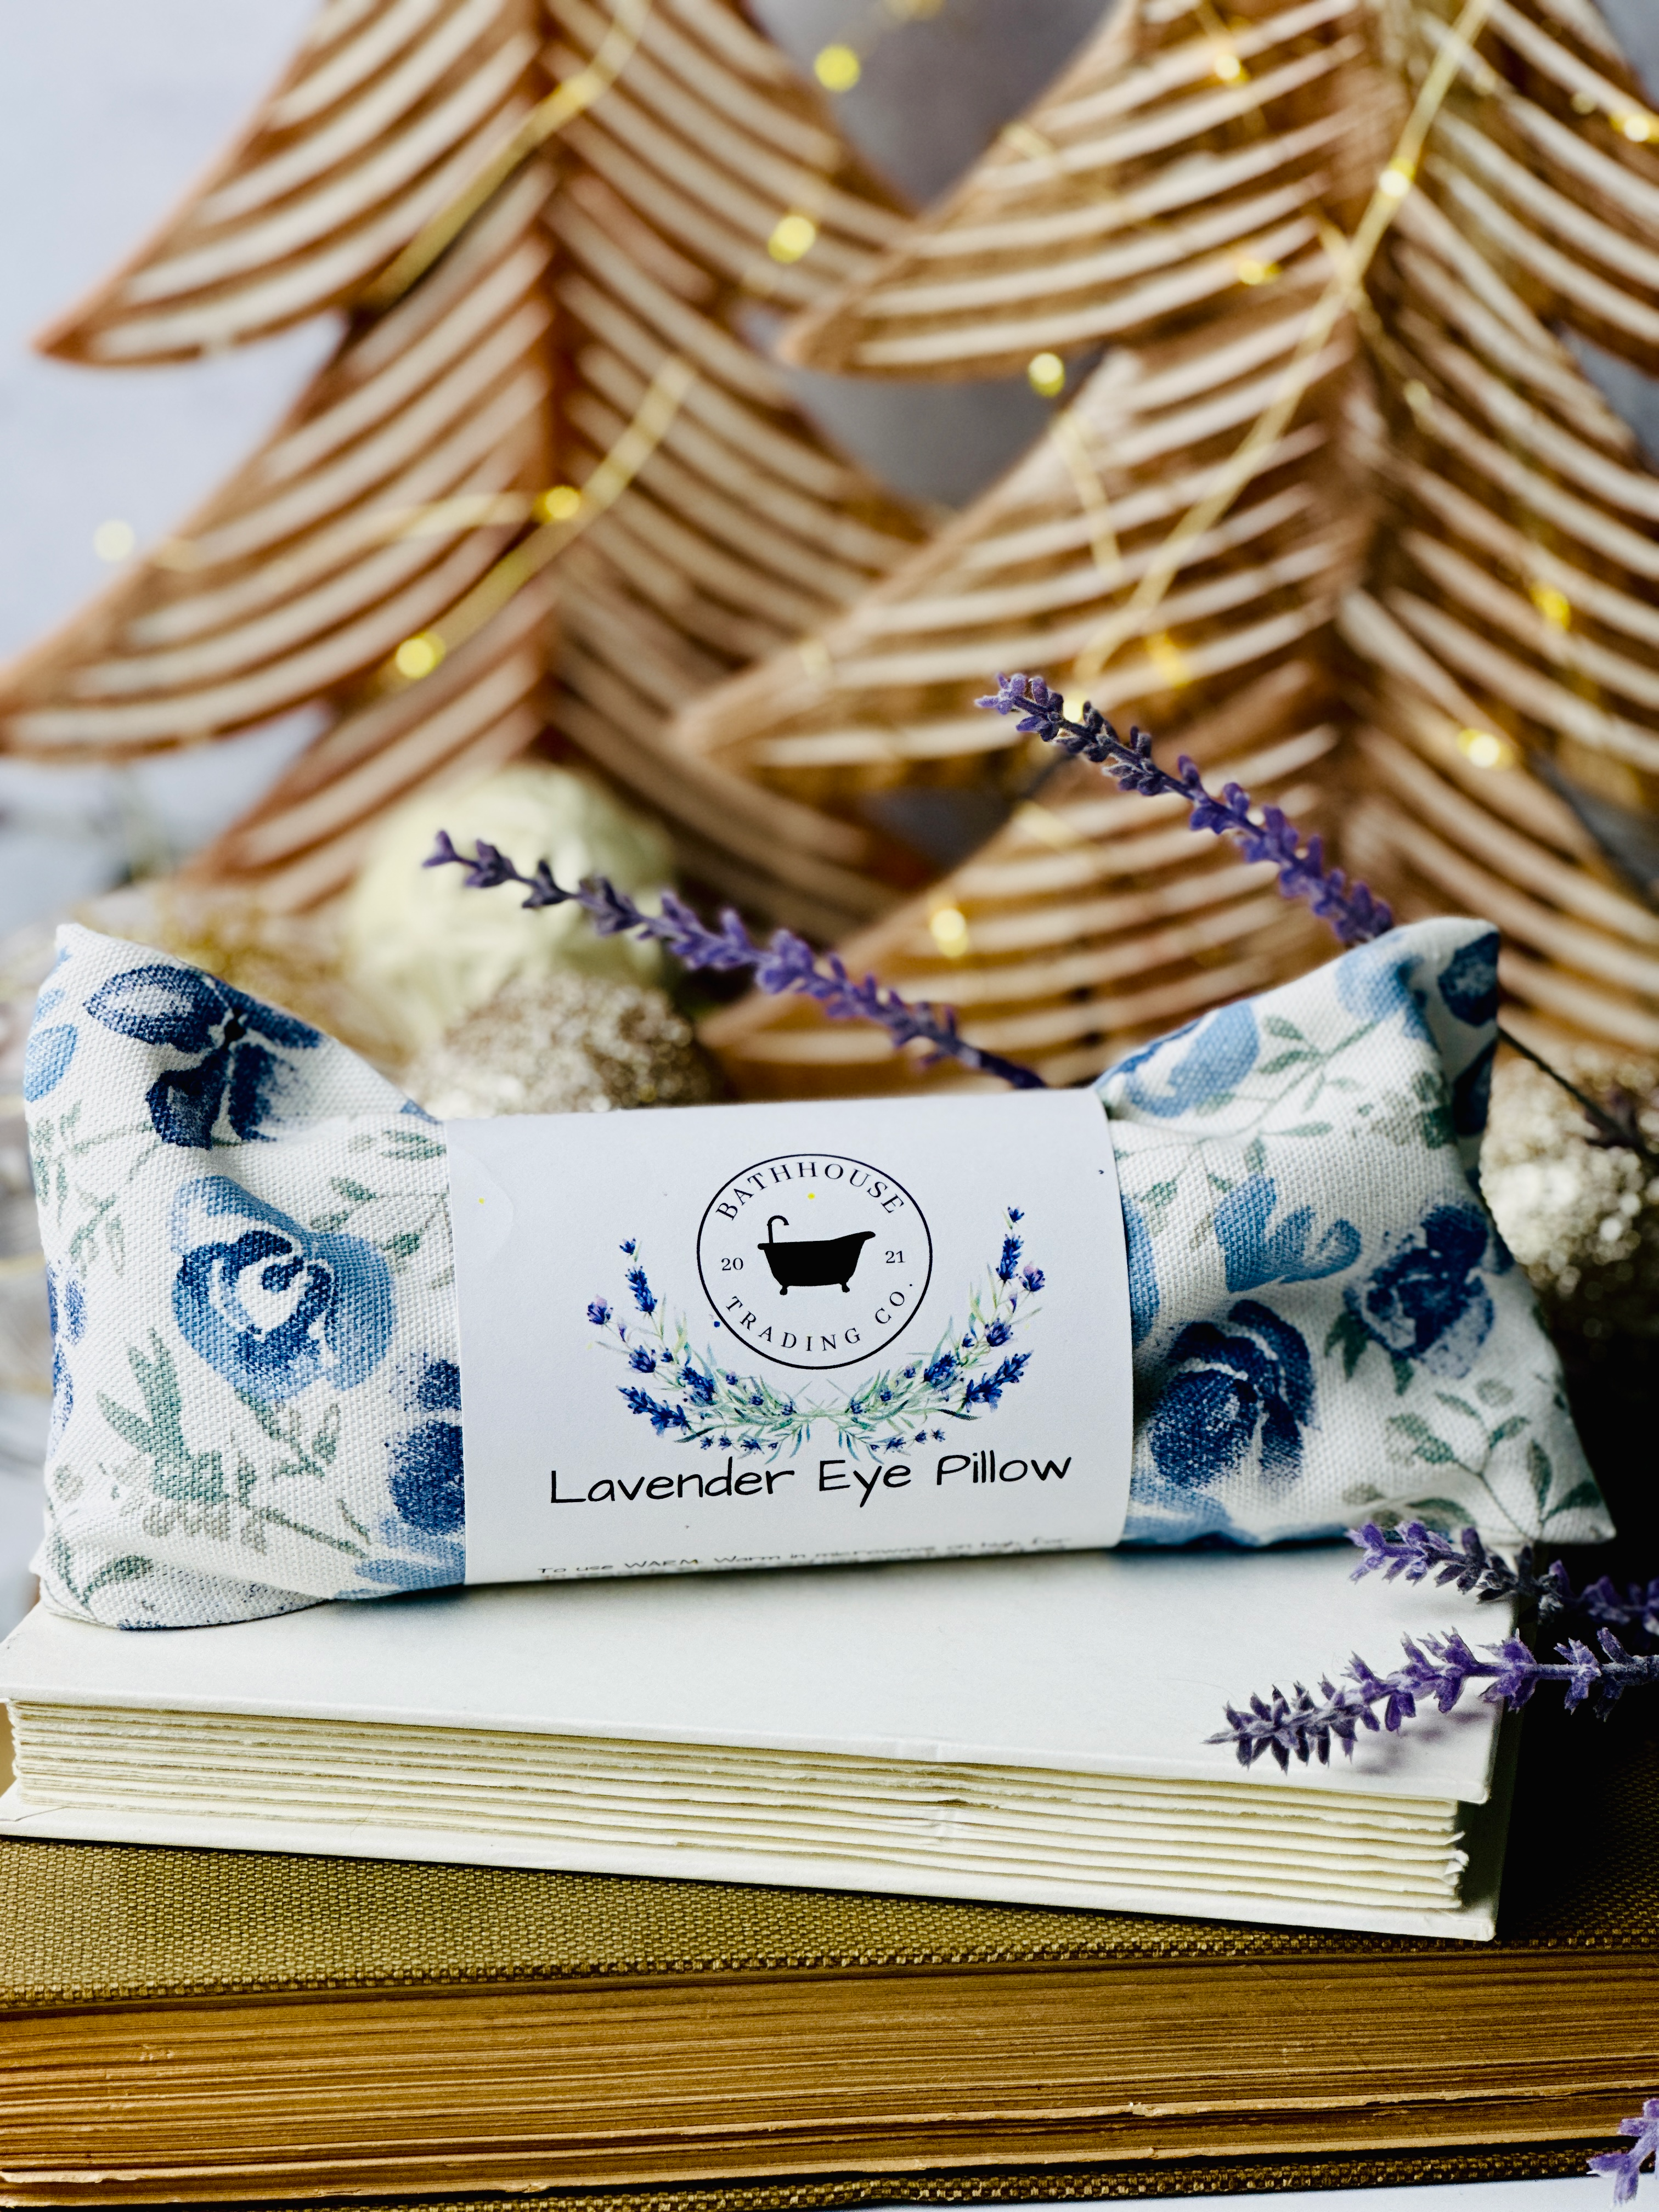 Lavender Eye Pillow - Bathhouse Trading Company